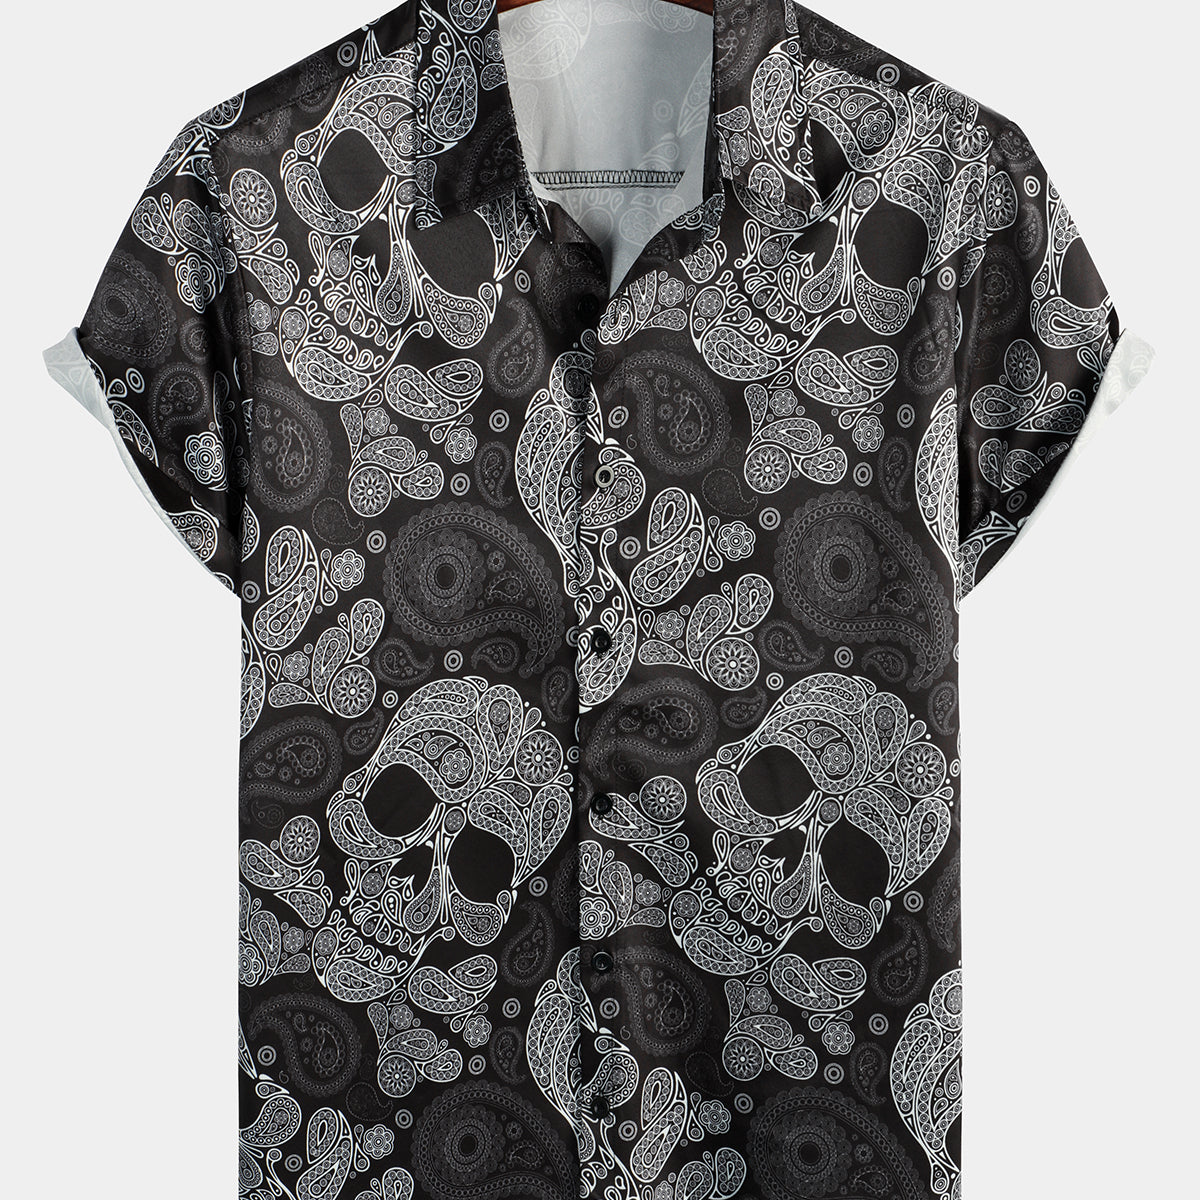 Men's Funny Black Skull Print Cool Paisley Button Up Punk Rock Short Sleeve Shirt